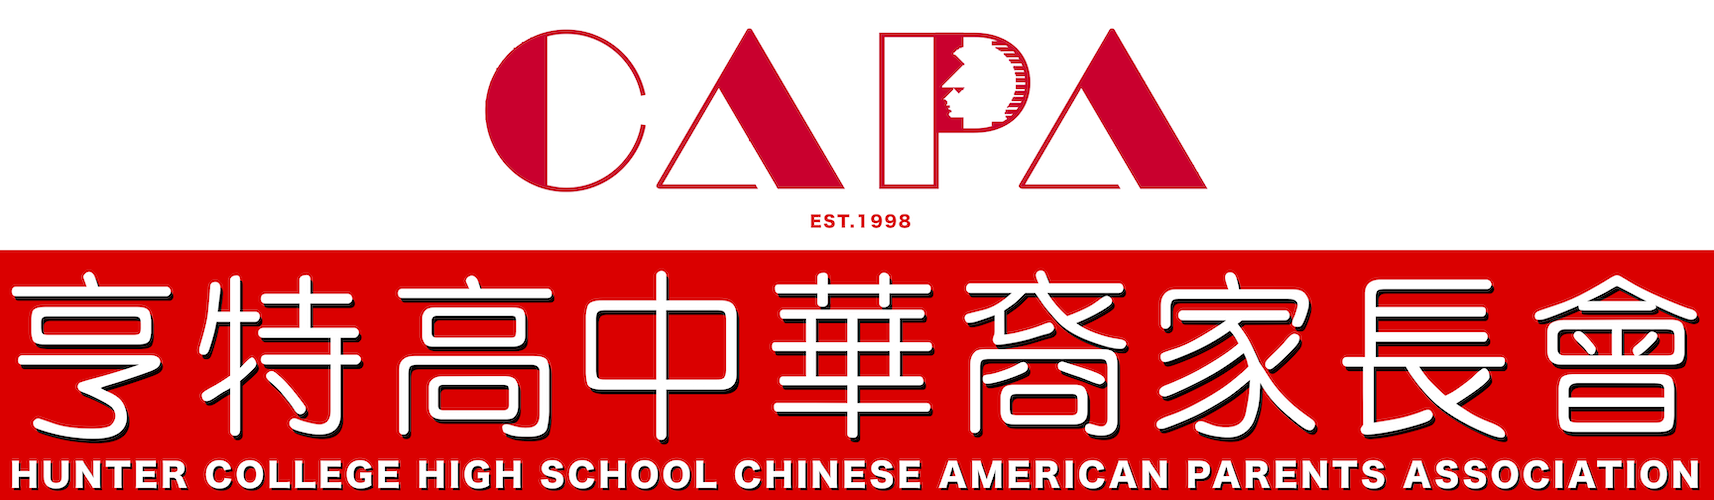 CAPA - Hunter College High School Logo